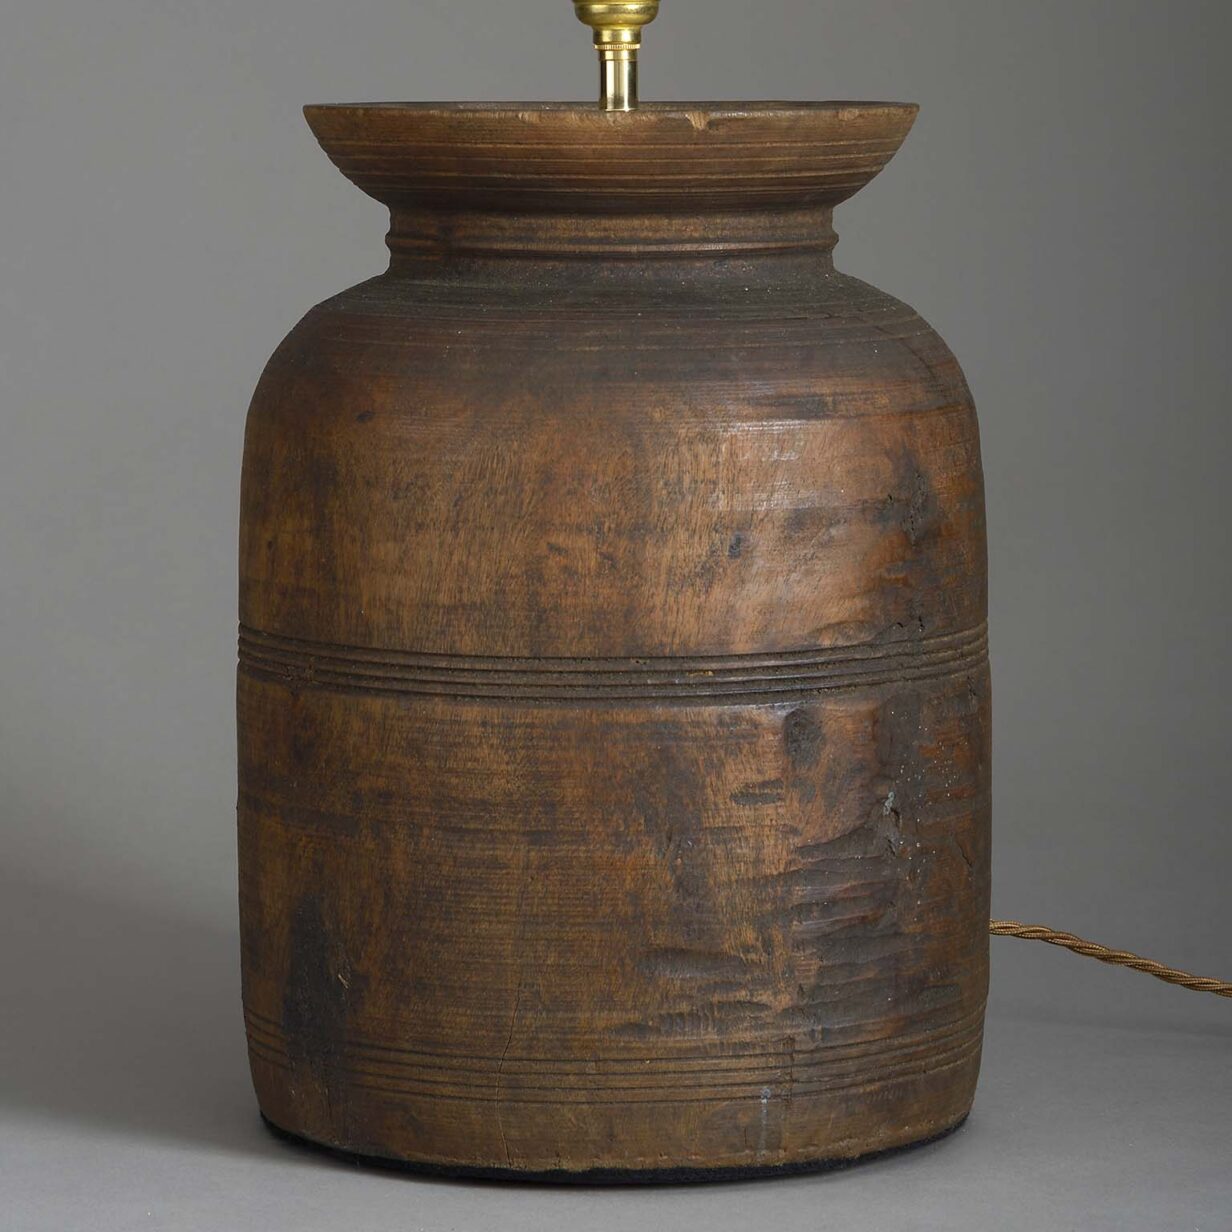 Early 20th century turned wooden tekhi jar lamp